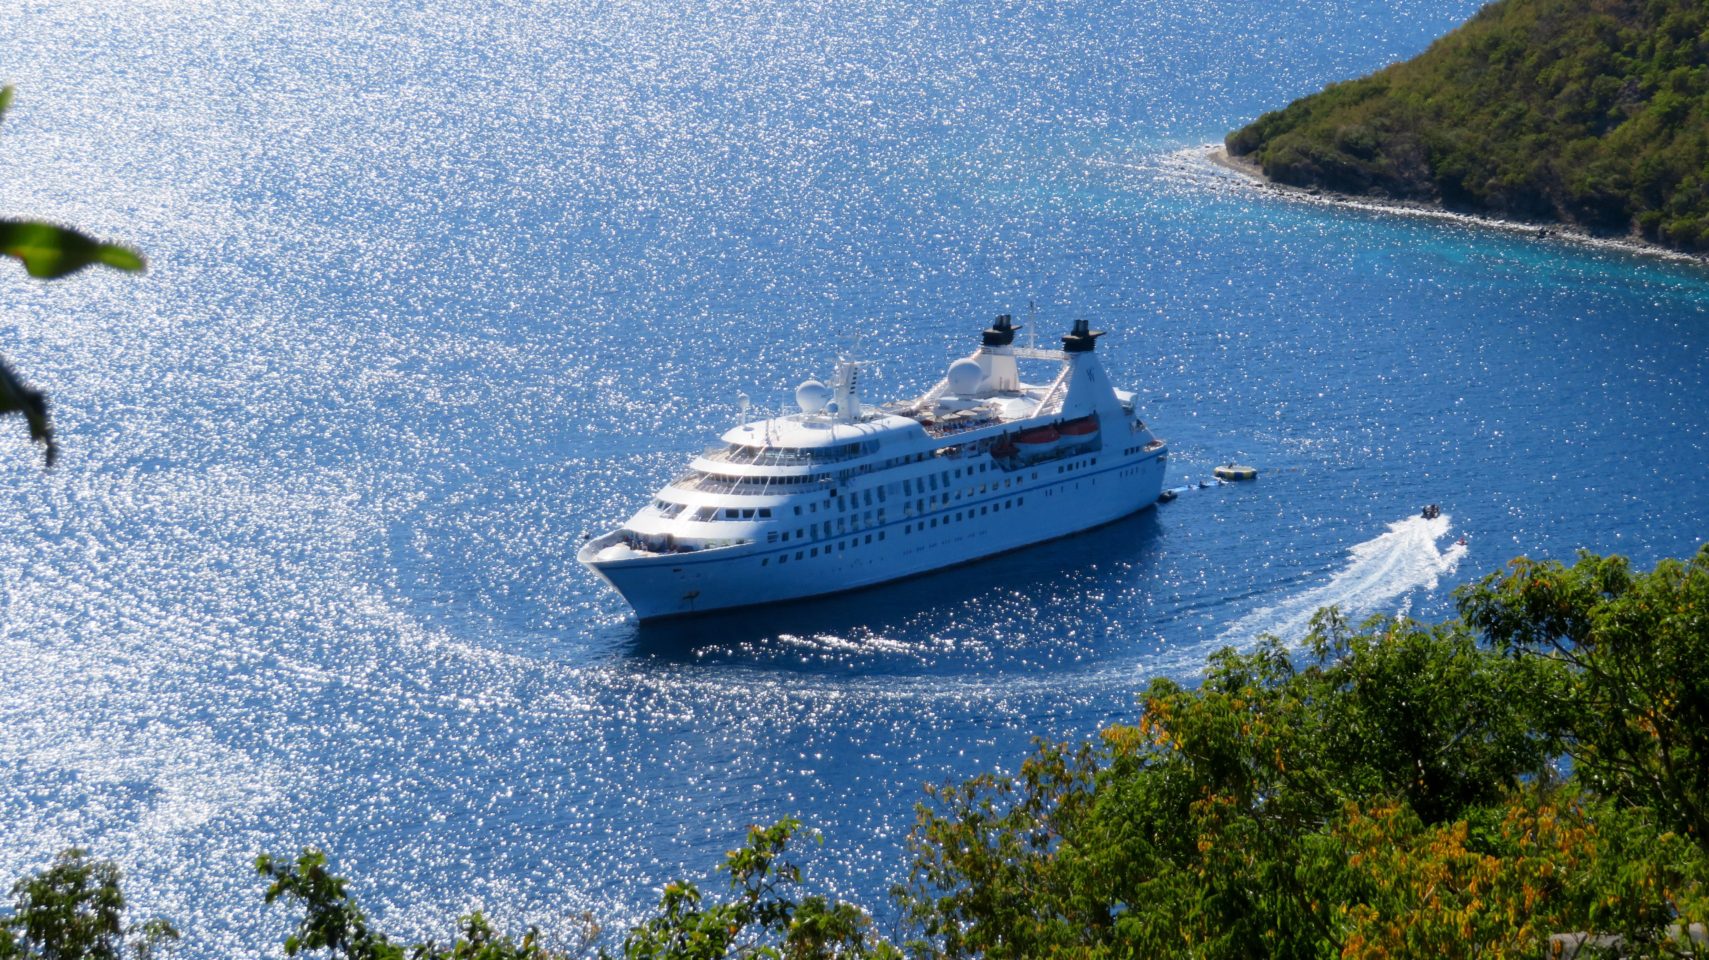 Windstar Cruises ~ the luxurious Star Legend where I slept like a baby